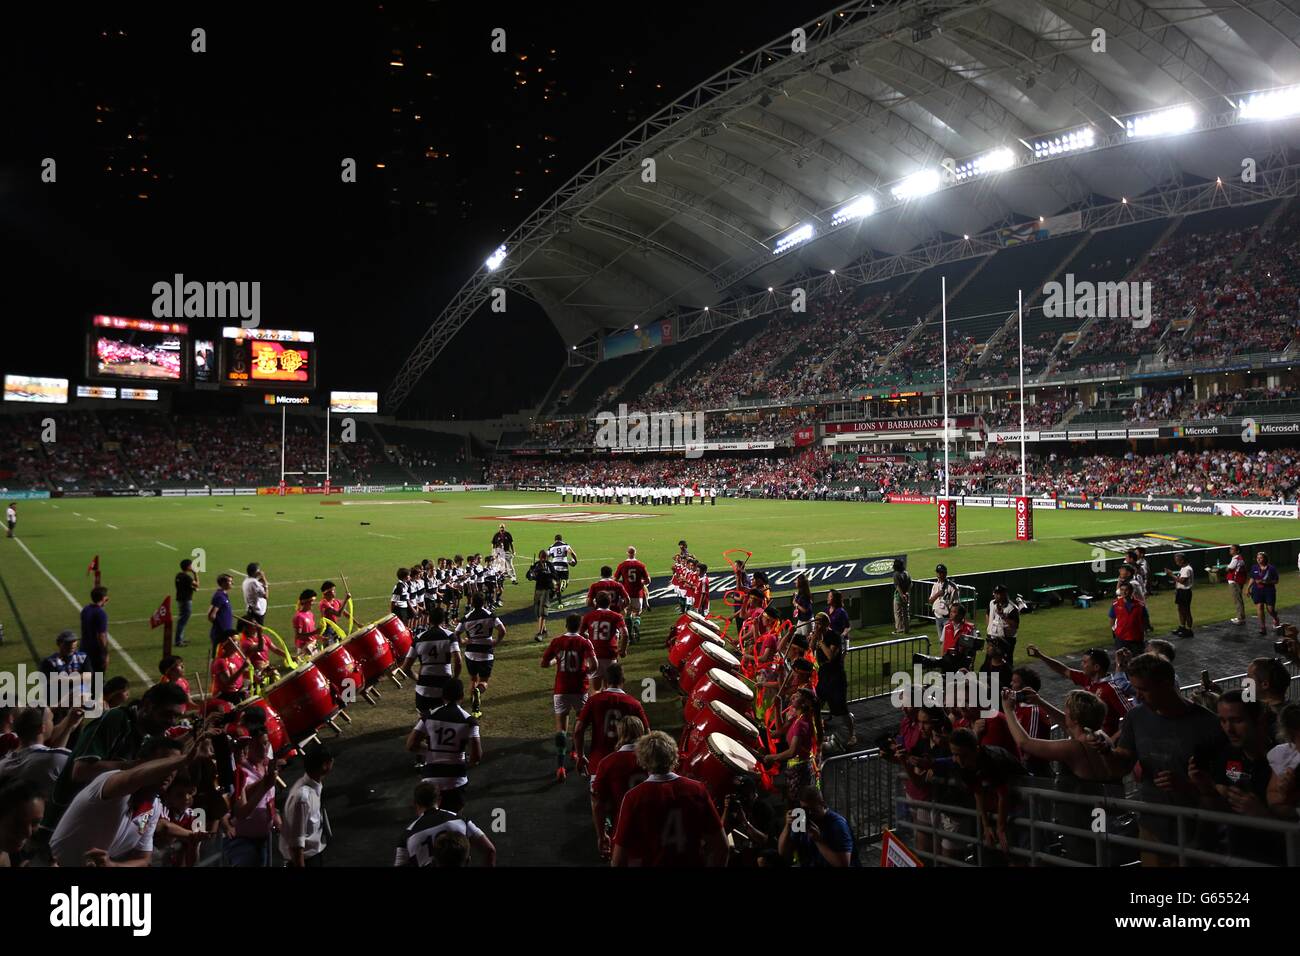 Rugby - 2013 británicos e irlandeses Lions Tour - bárbaros v LOS LEONES BRITÁNICOS E IRLANDESES - estadio de Hong Kong Foto de stock